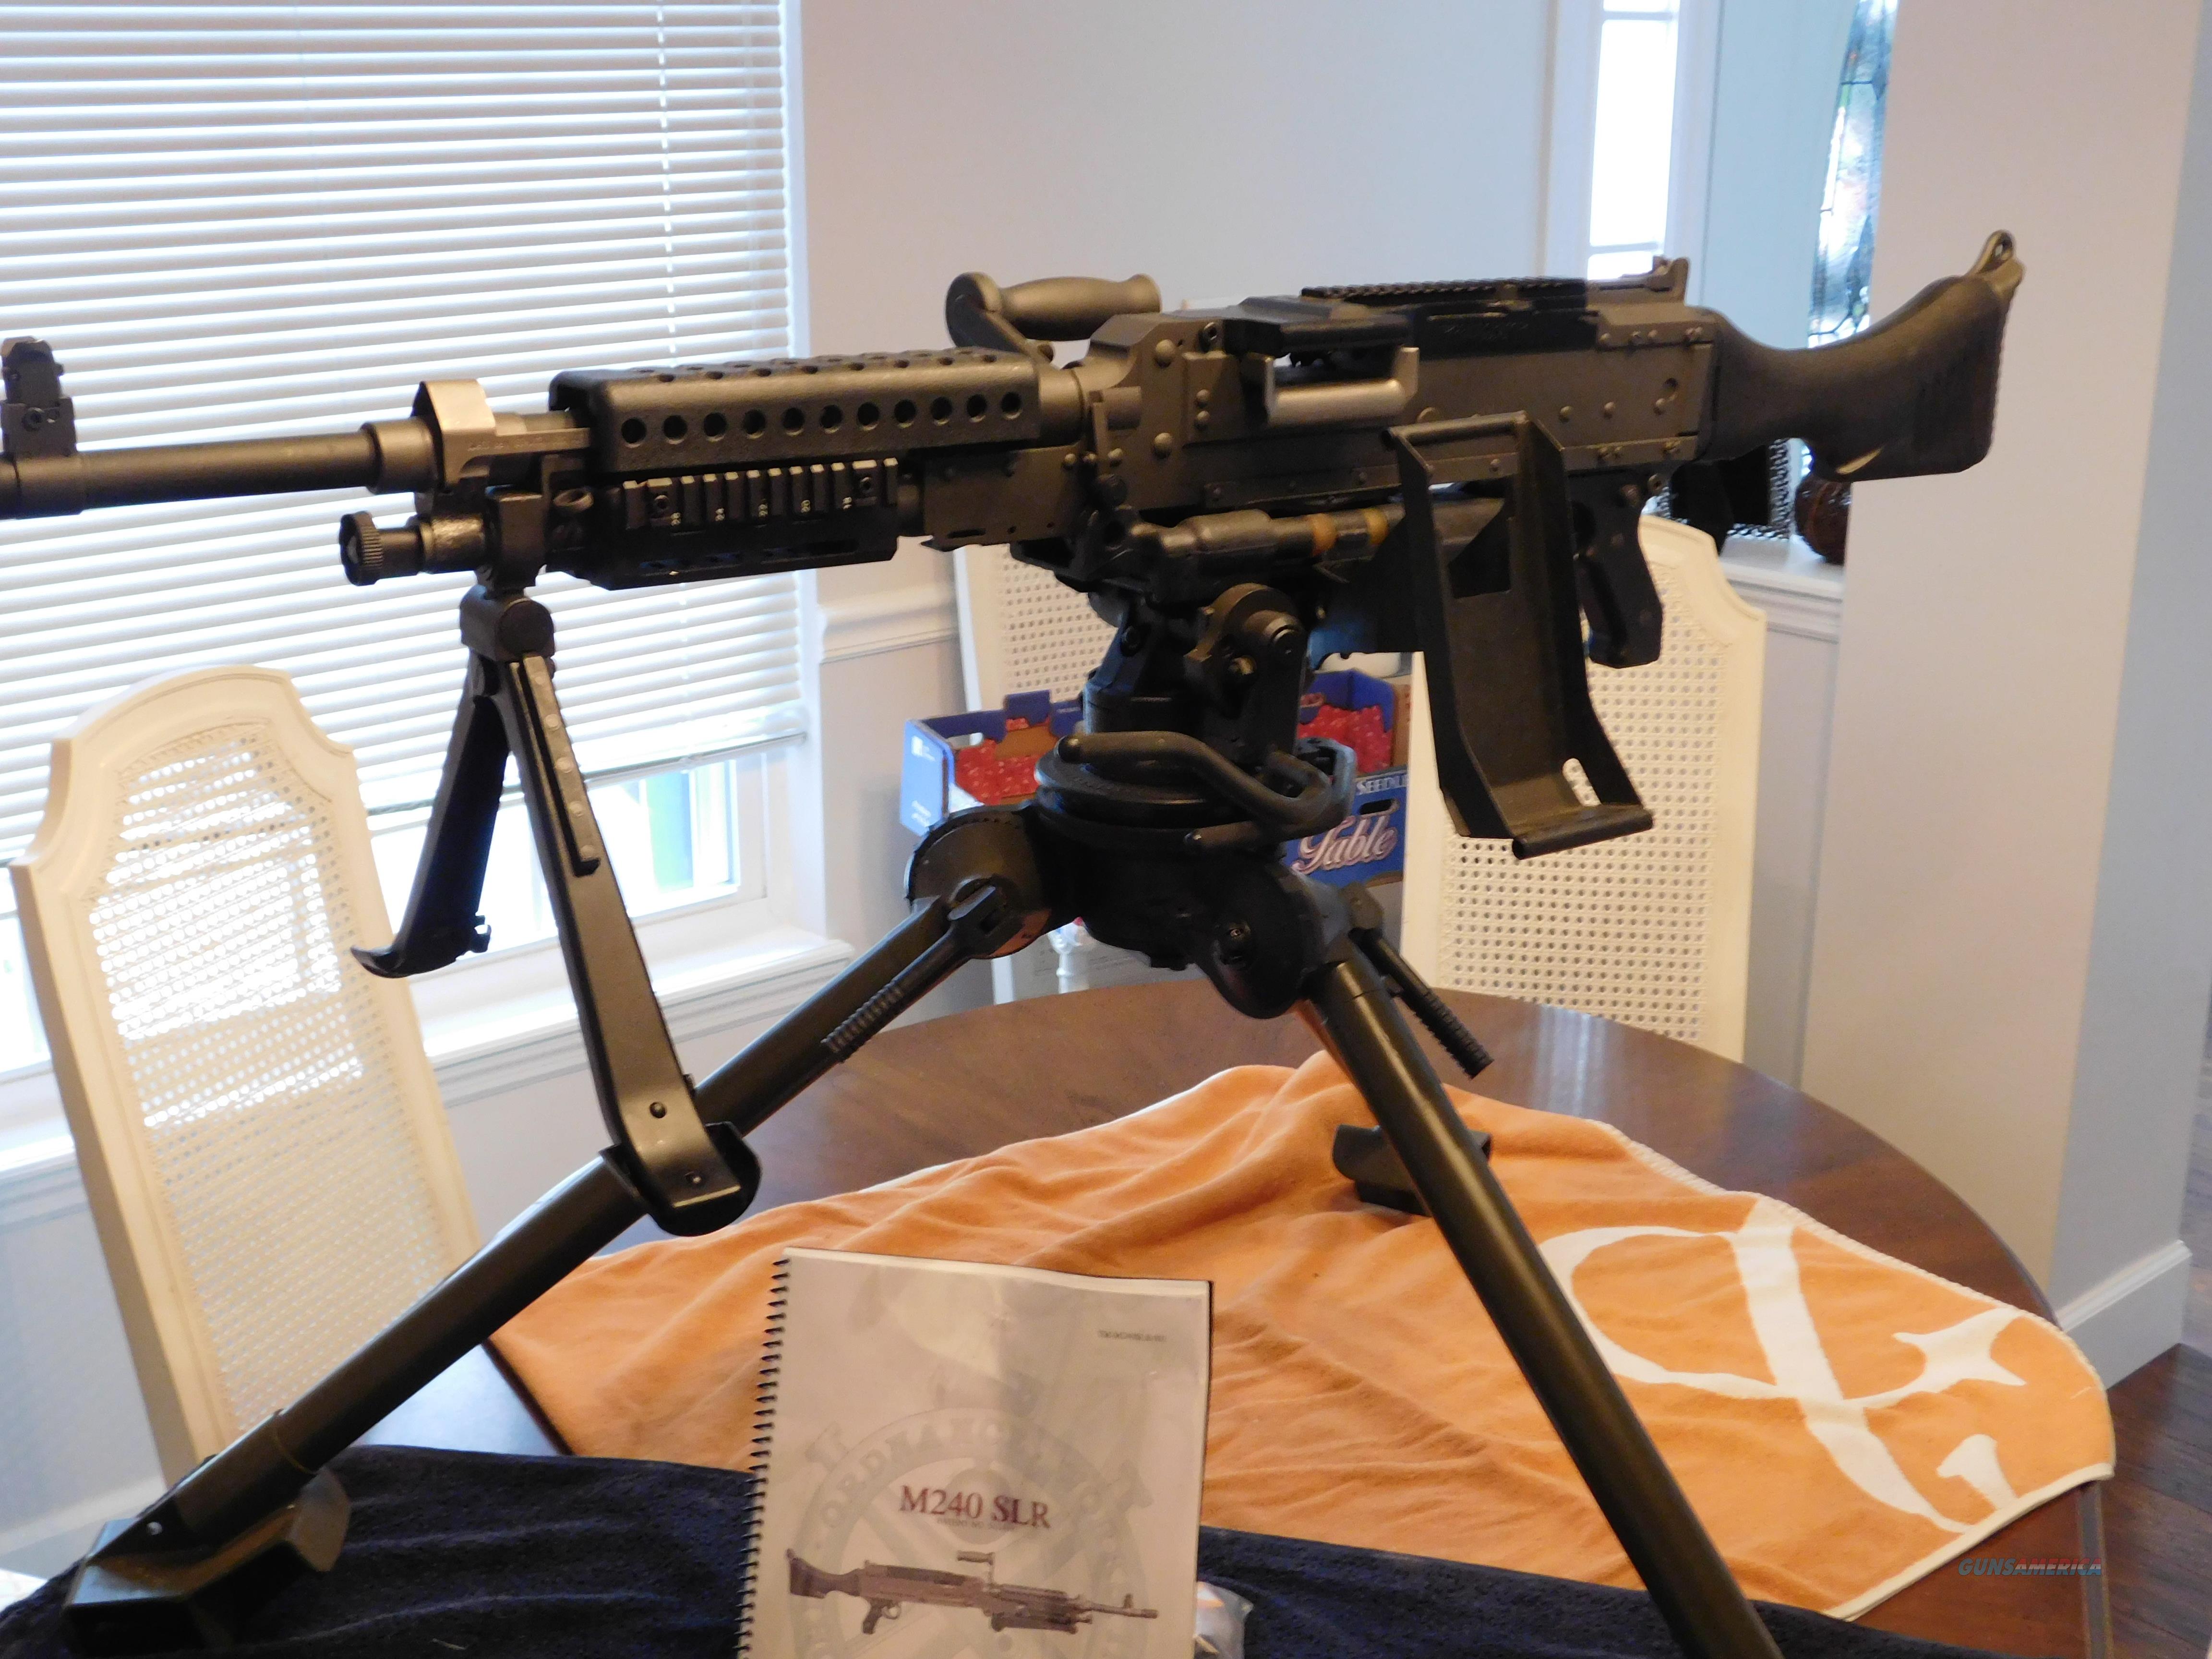 Transferable Machine Gun for sale at Waltergunshop.com